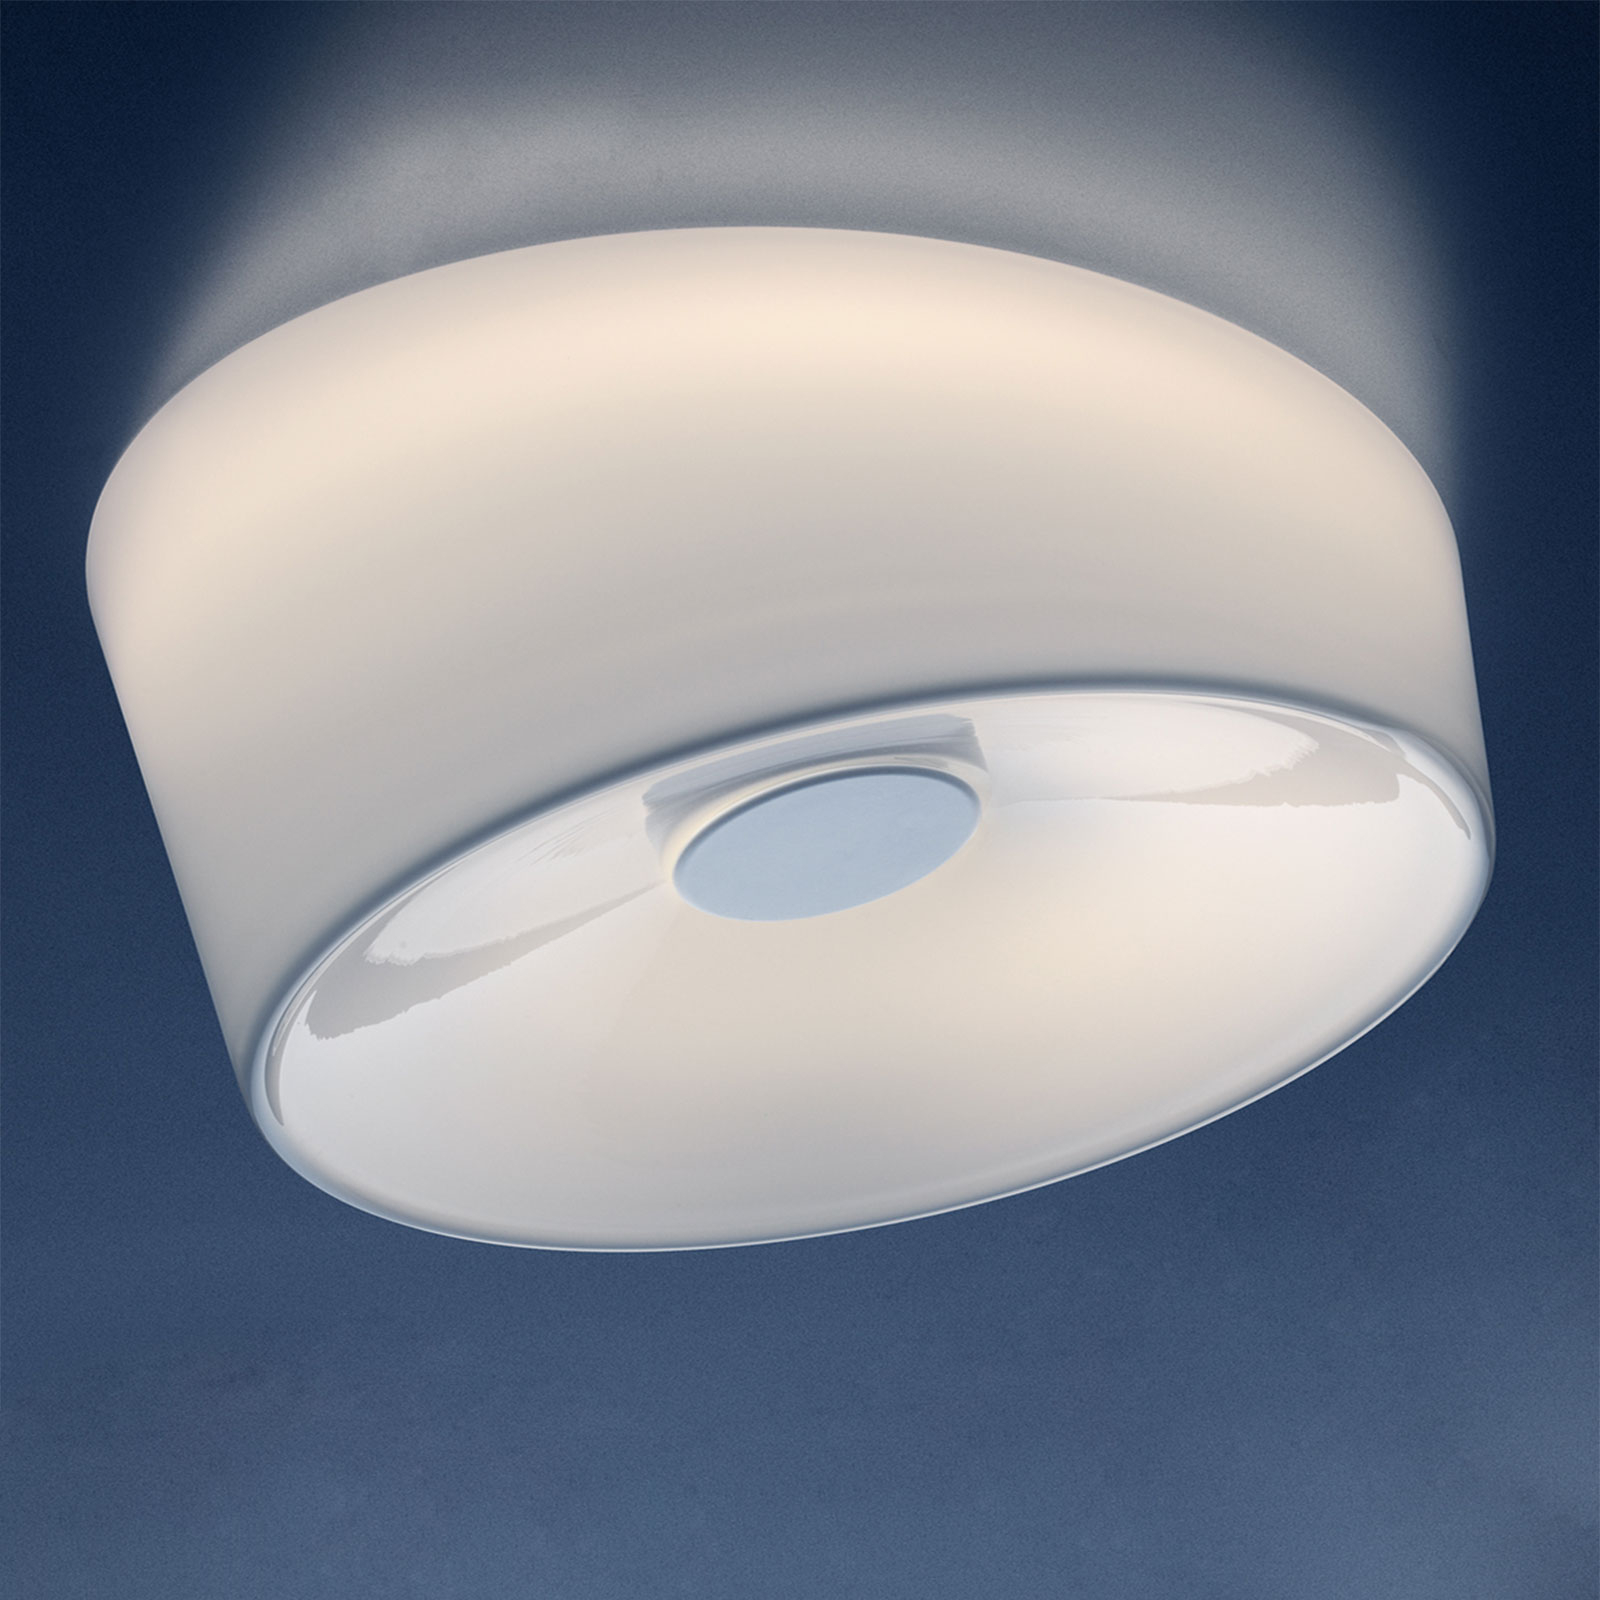 Foscarini Lumiere G9 plafondlamp, Ø 34 cm, wit